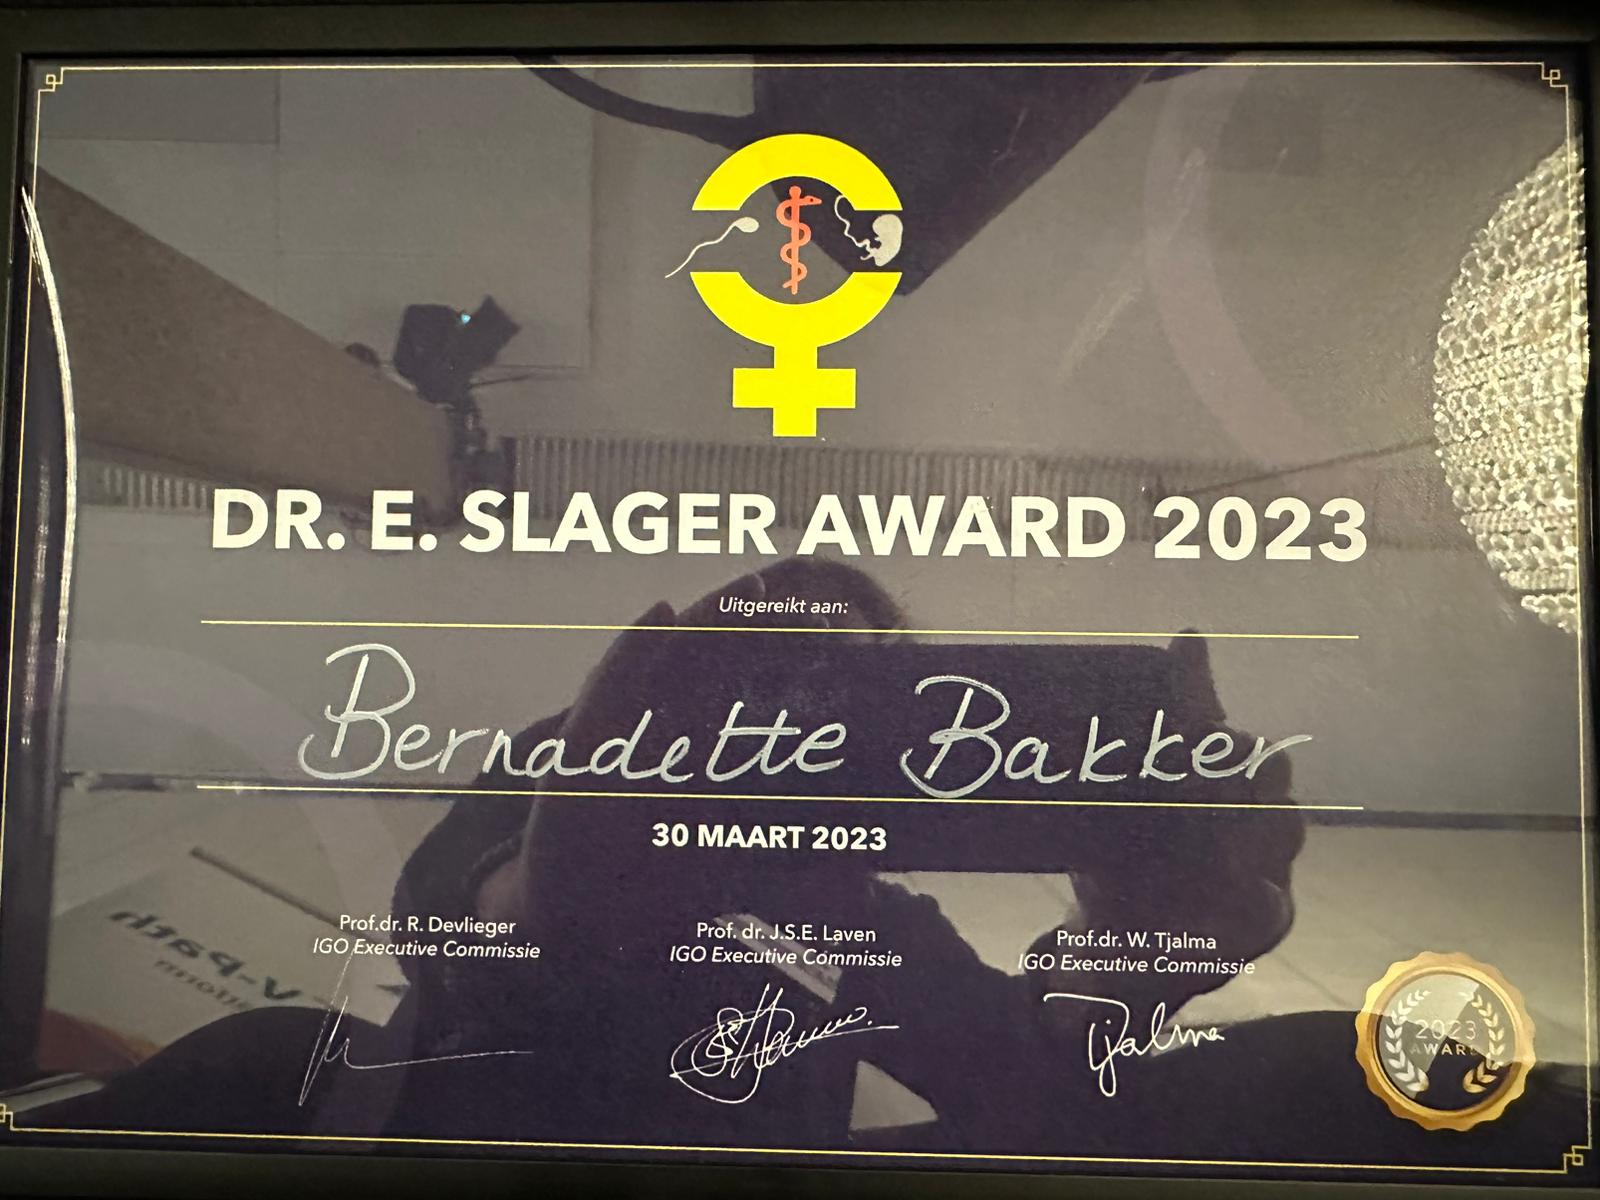 Dr. E. Slager Award for best presentation